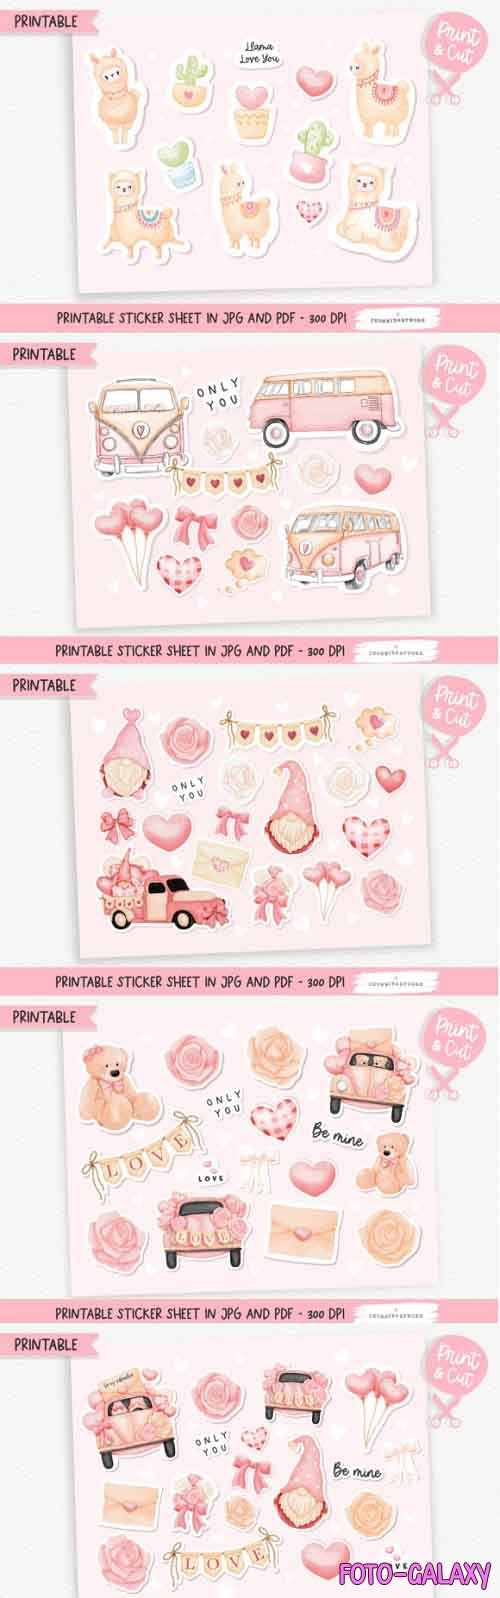 Valentine Printable Stickers sheet Bundle - Teddy Bear, Pink Van, Gnome, Llama